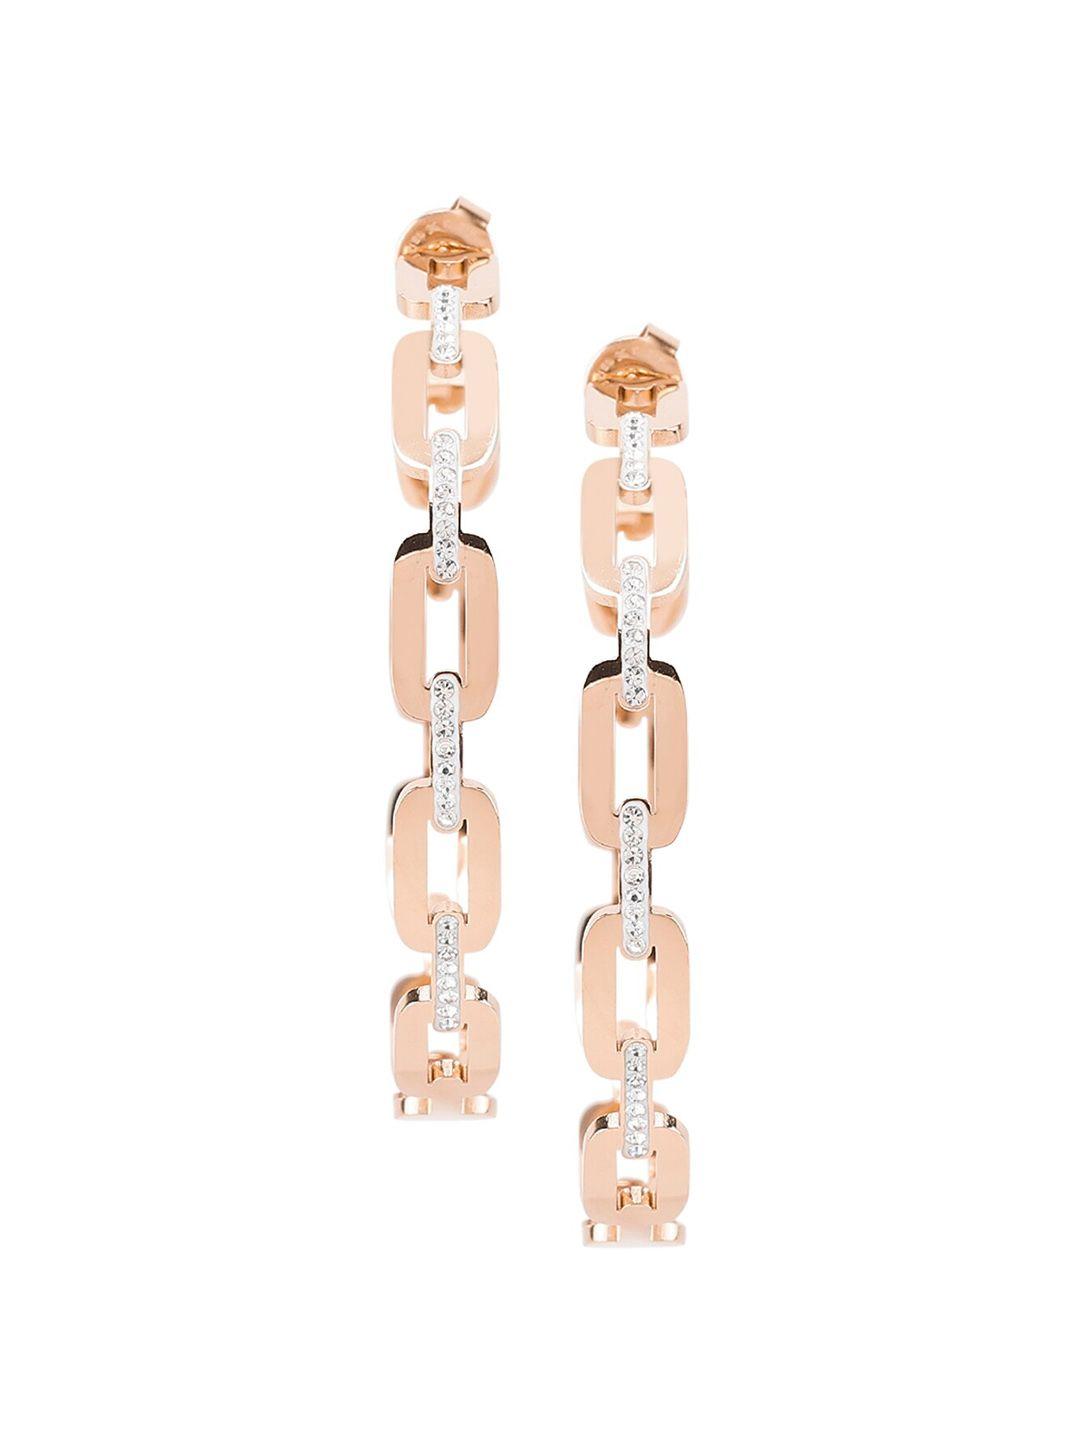 daniel klein rose gold contemporary hoop earrings